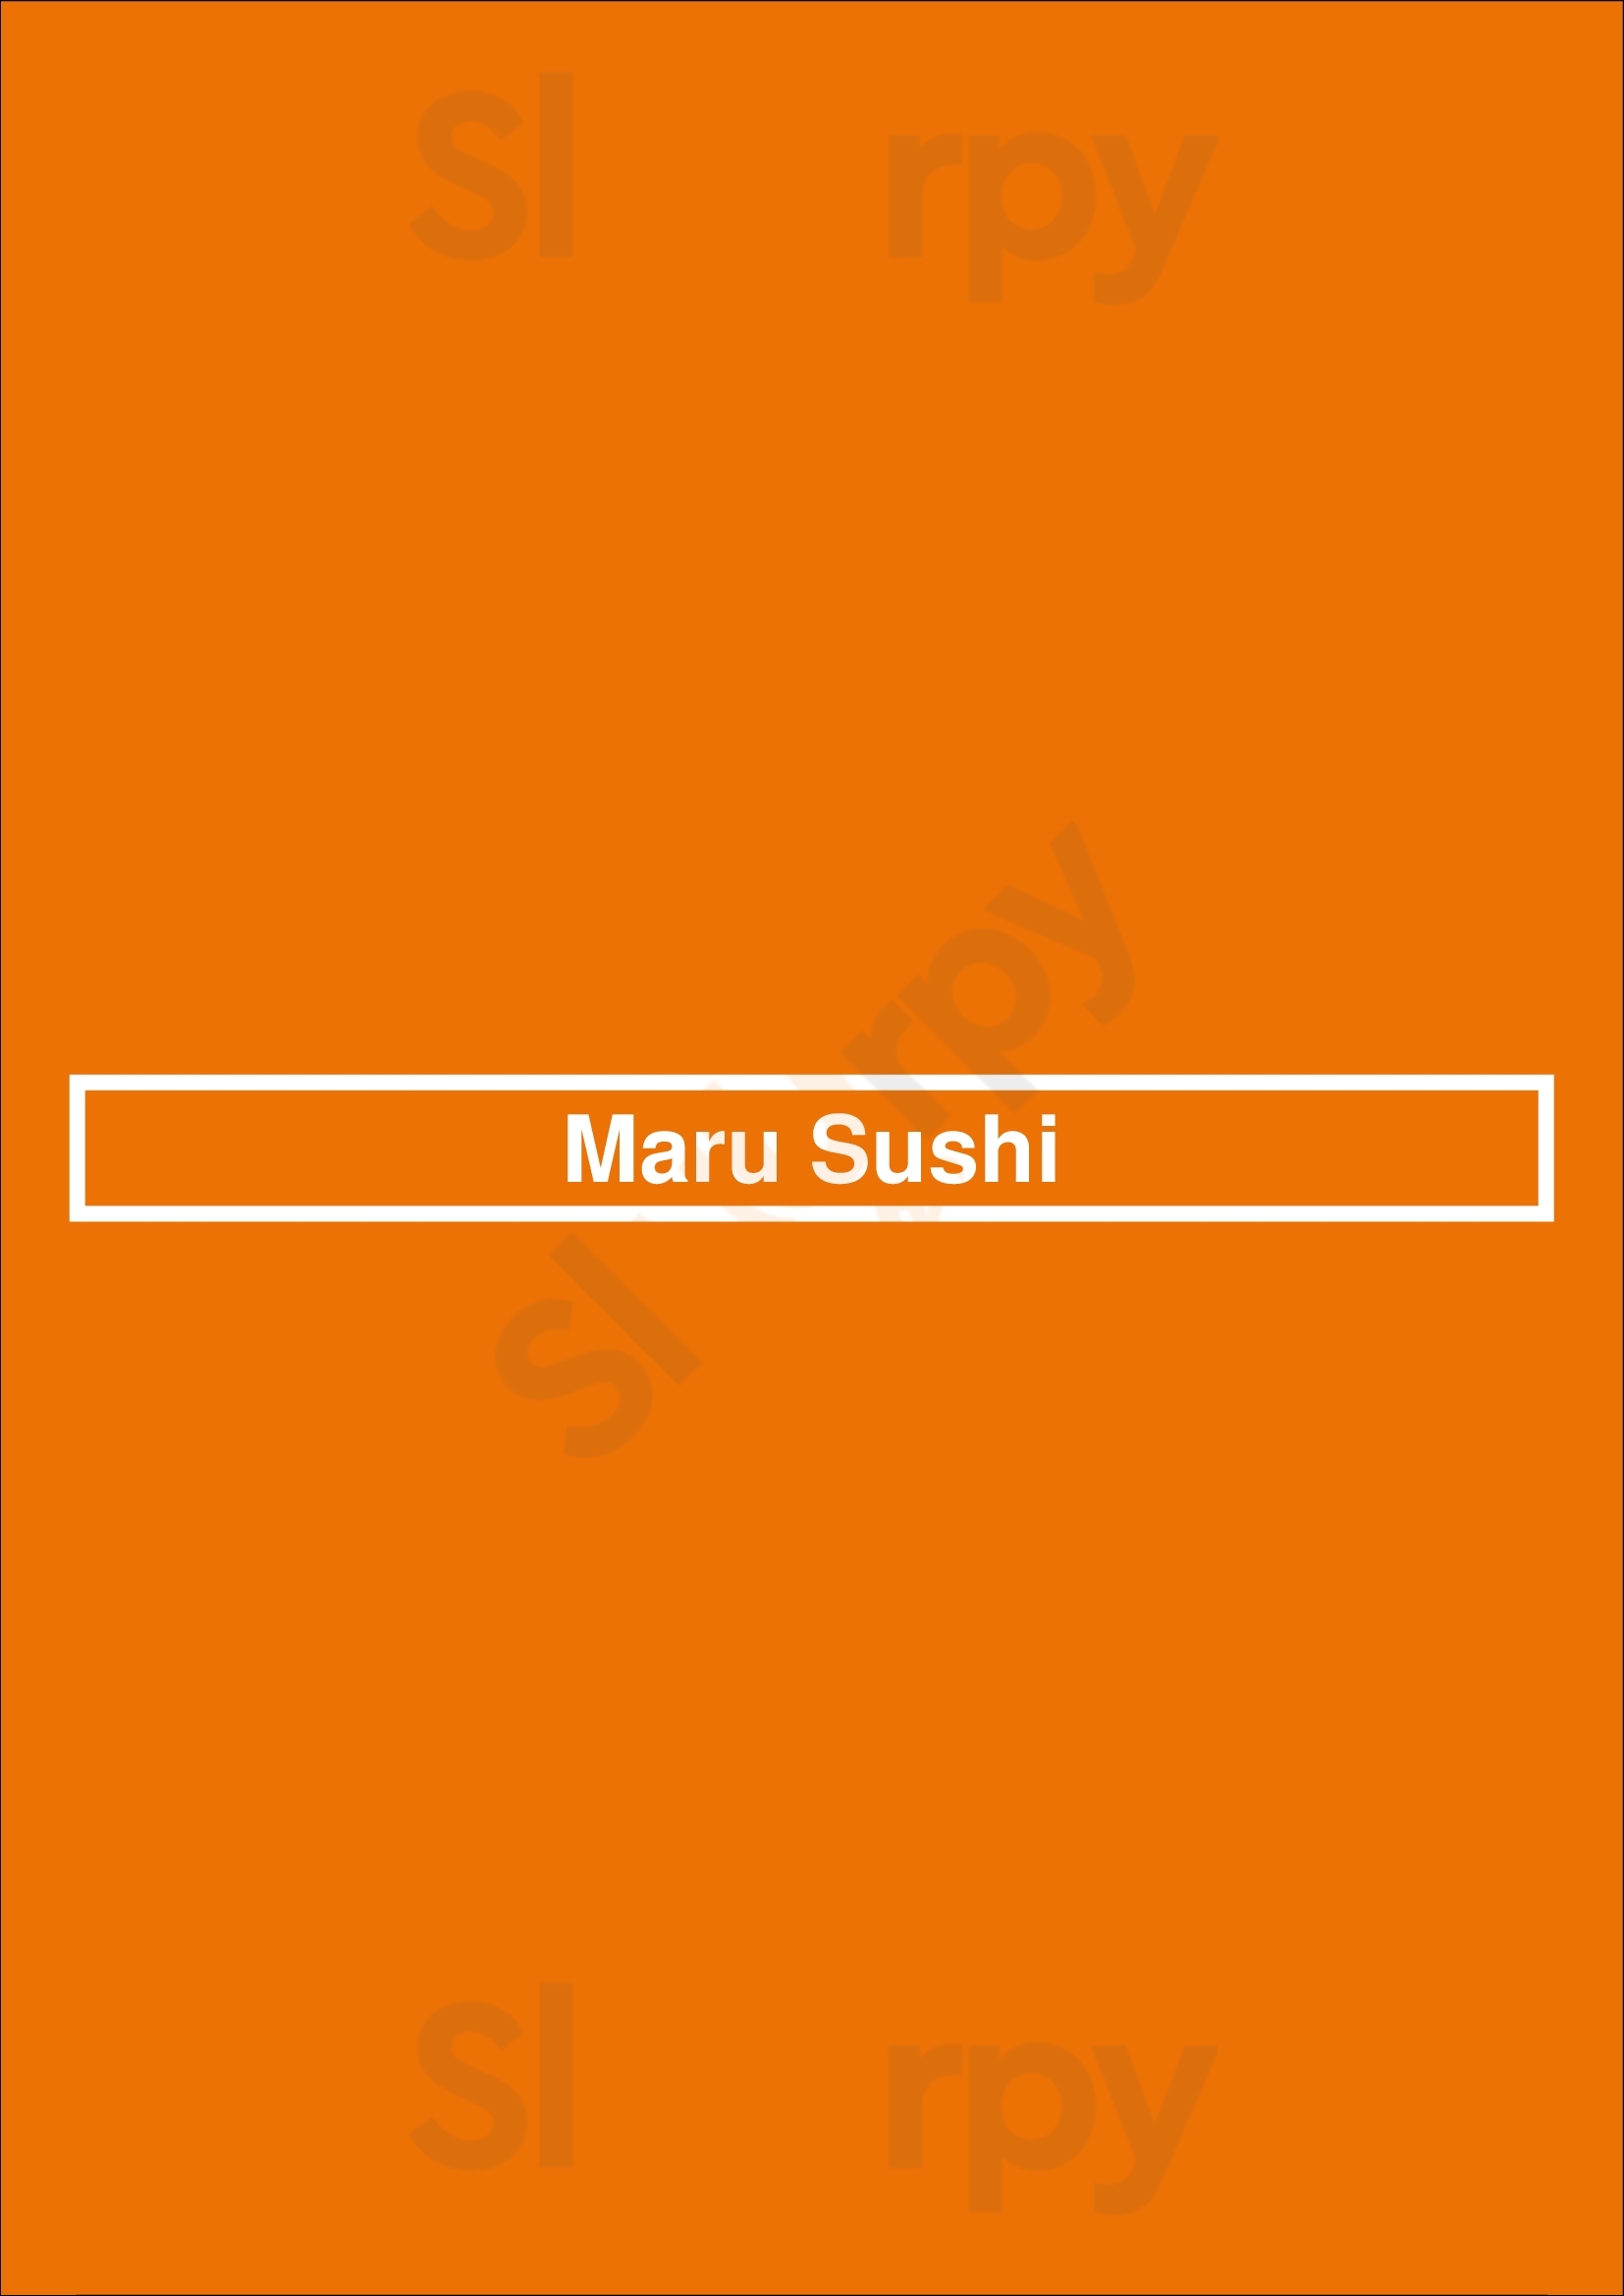 Maru Sushi Abbotsford Menu - 1